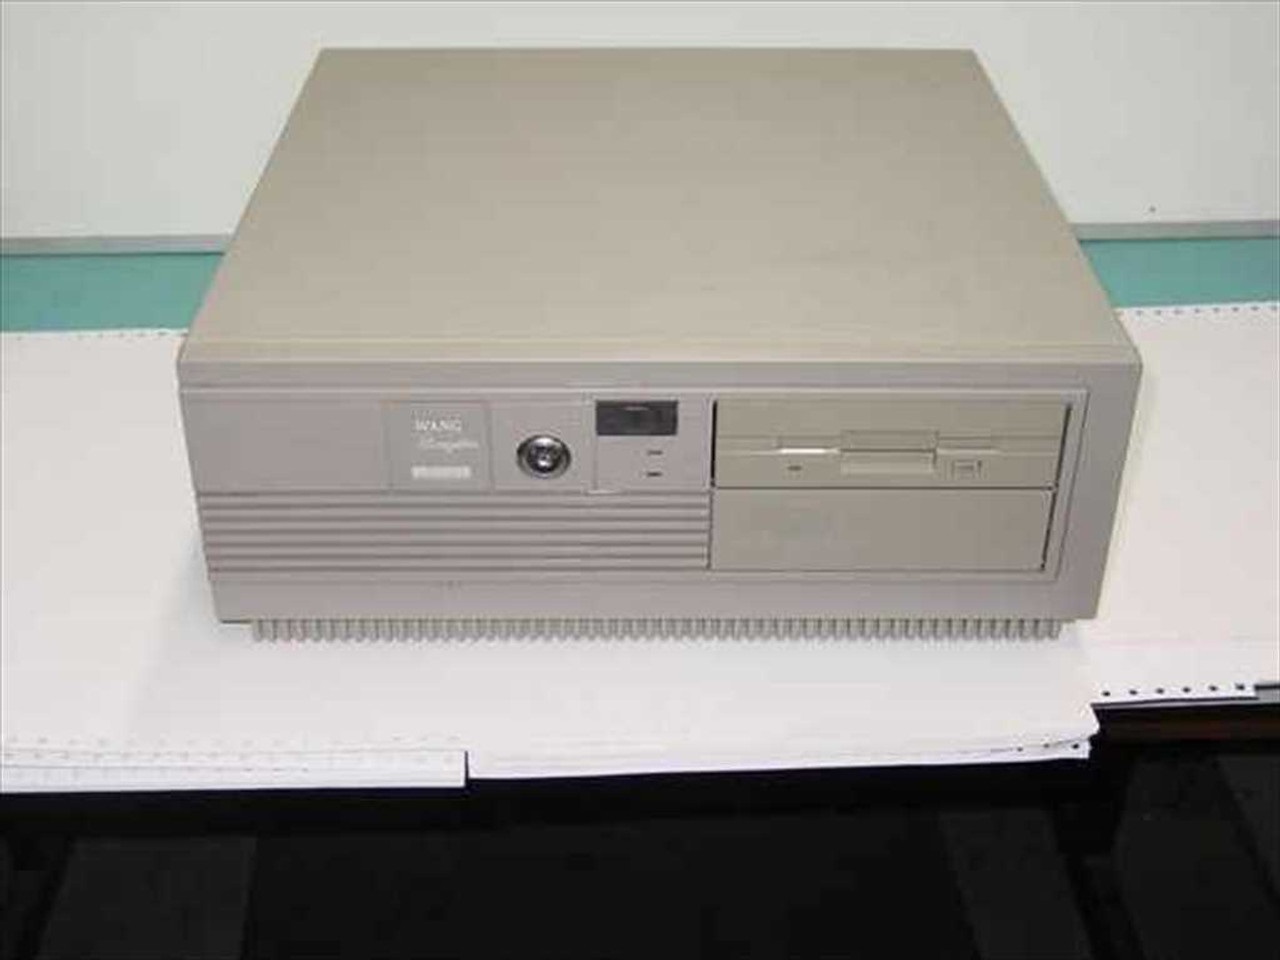 la Wang manufactured IBM-compatible PC